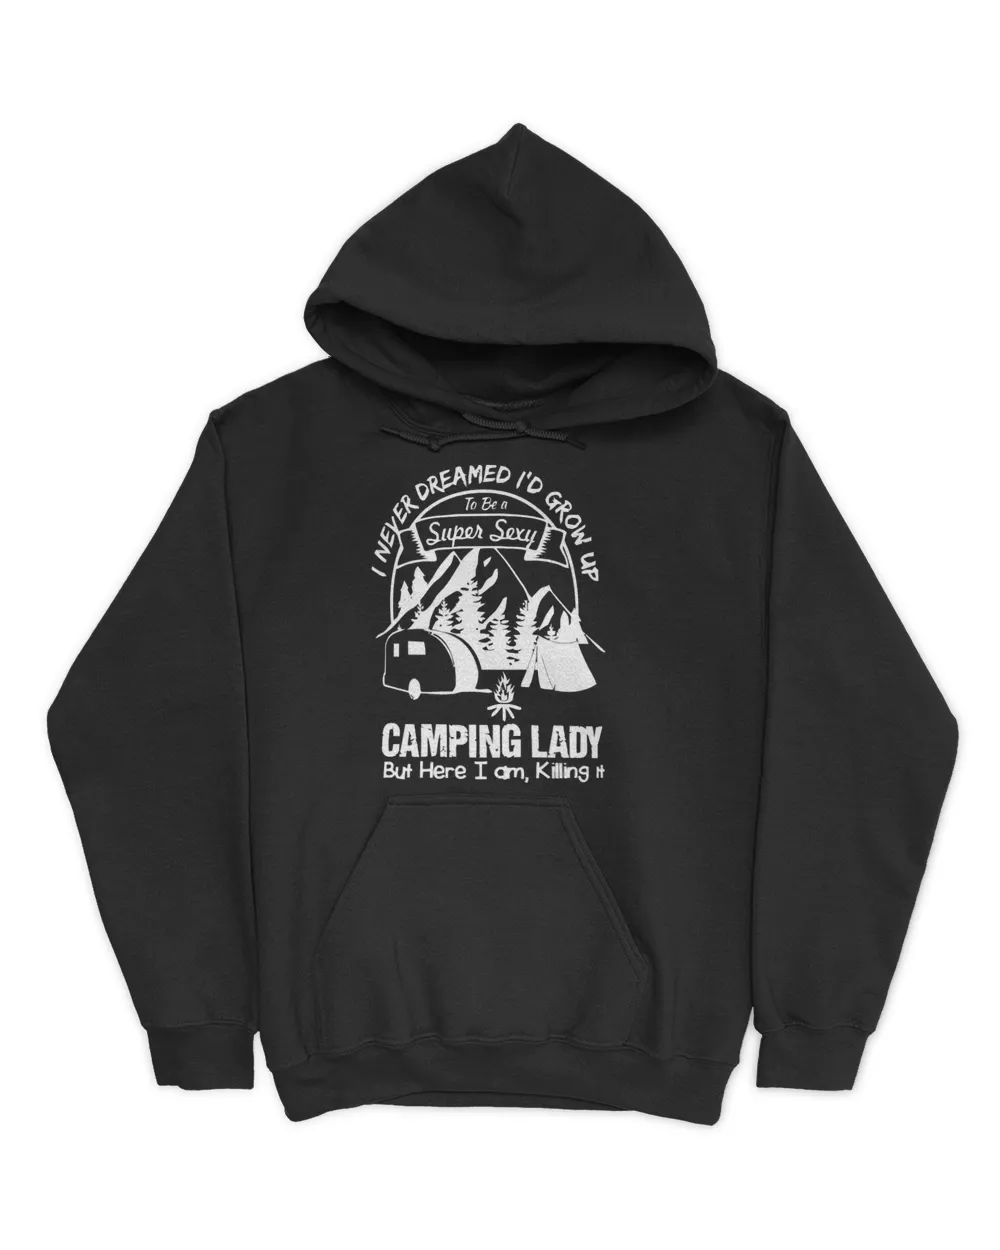 Camping Camp hikingwhiskey1camper Camper